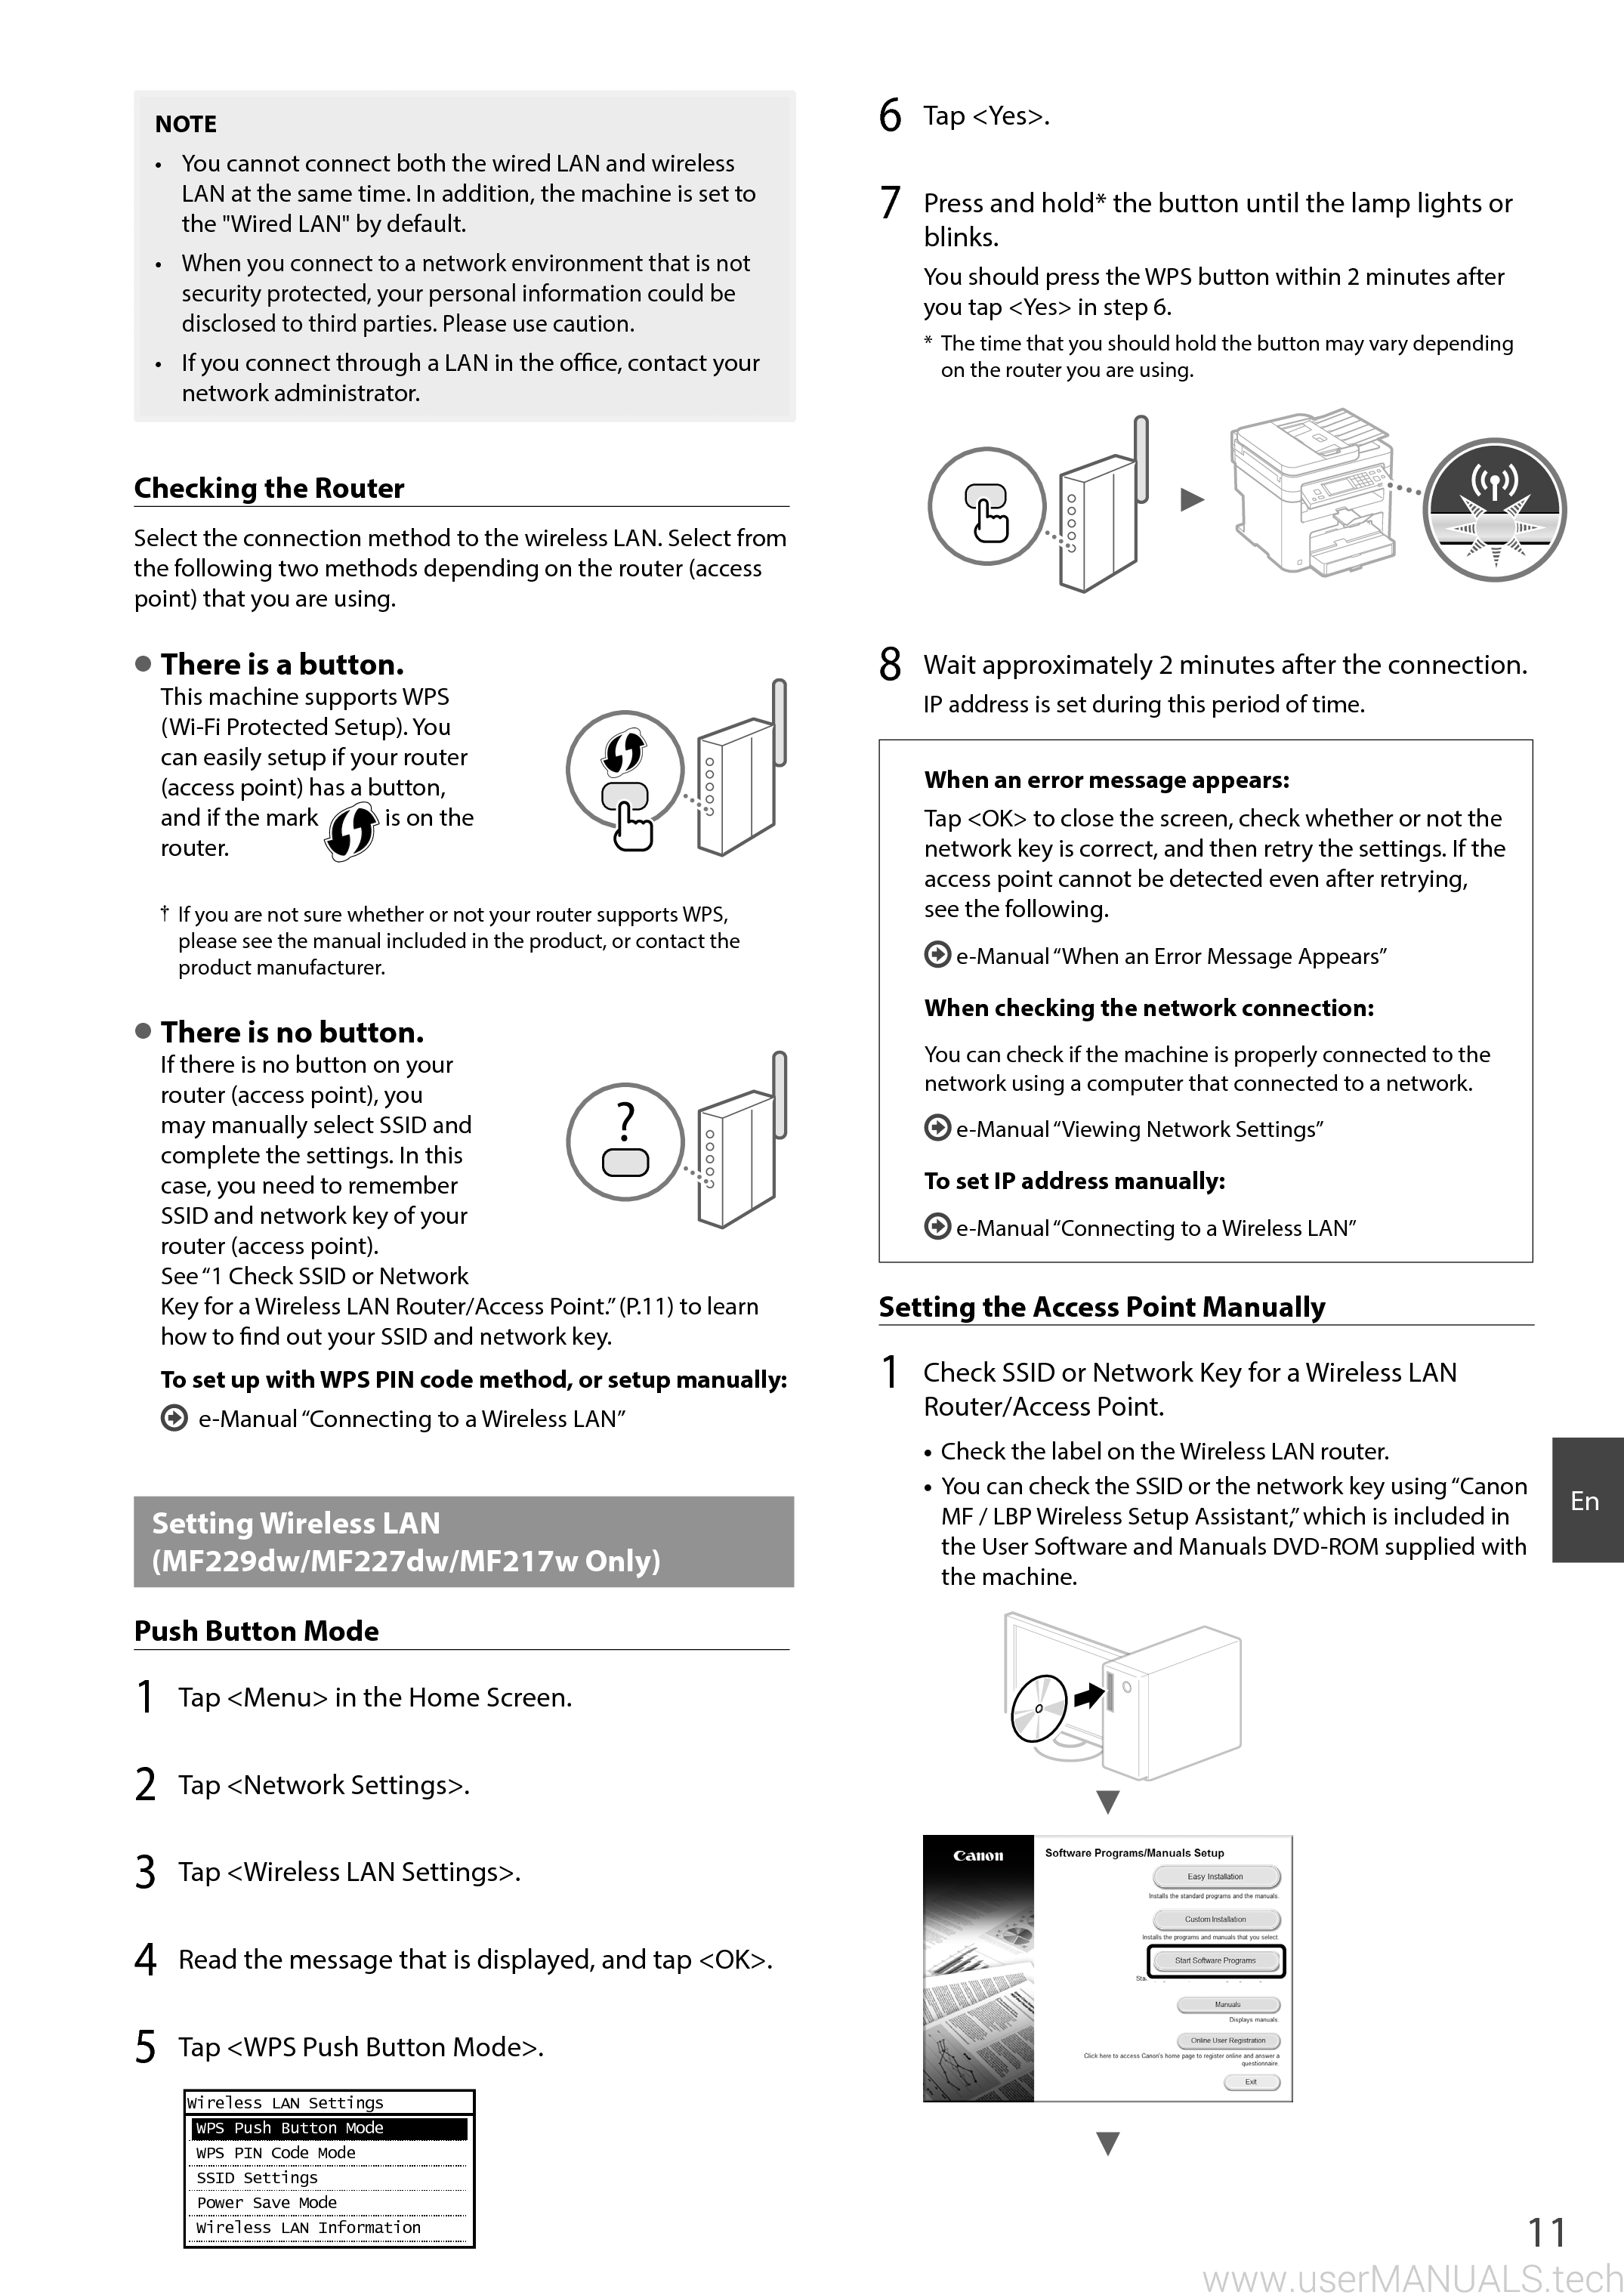 Canon printer imageCLASS MF217w User Manual, Page: 2